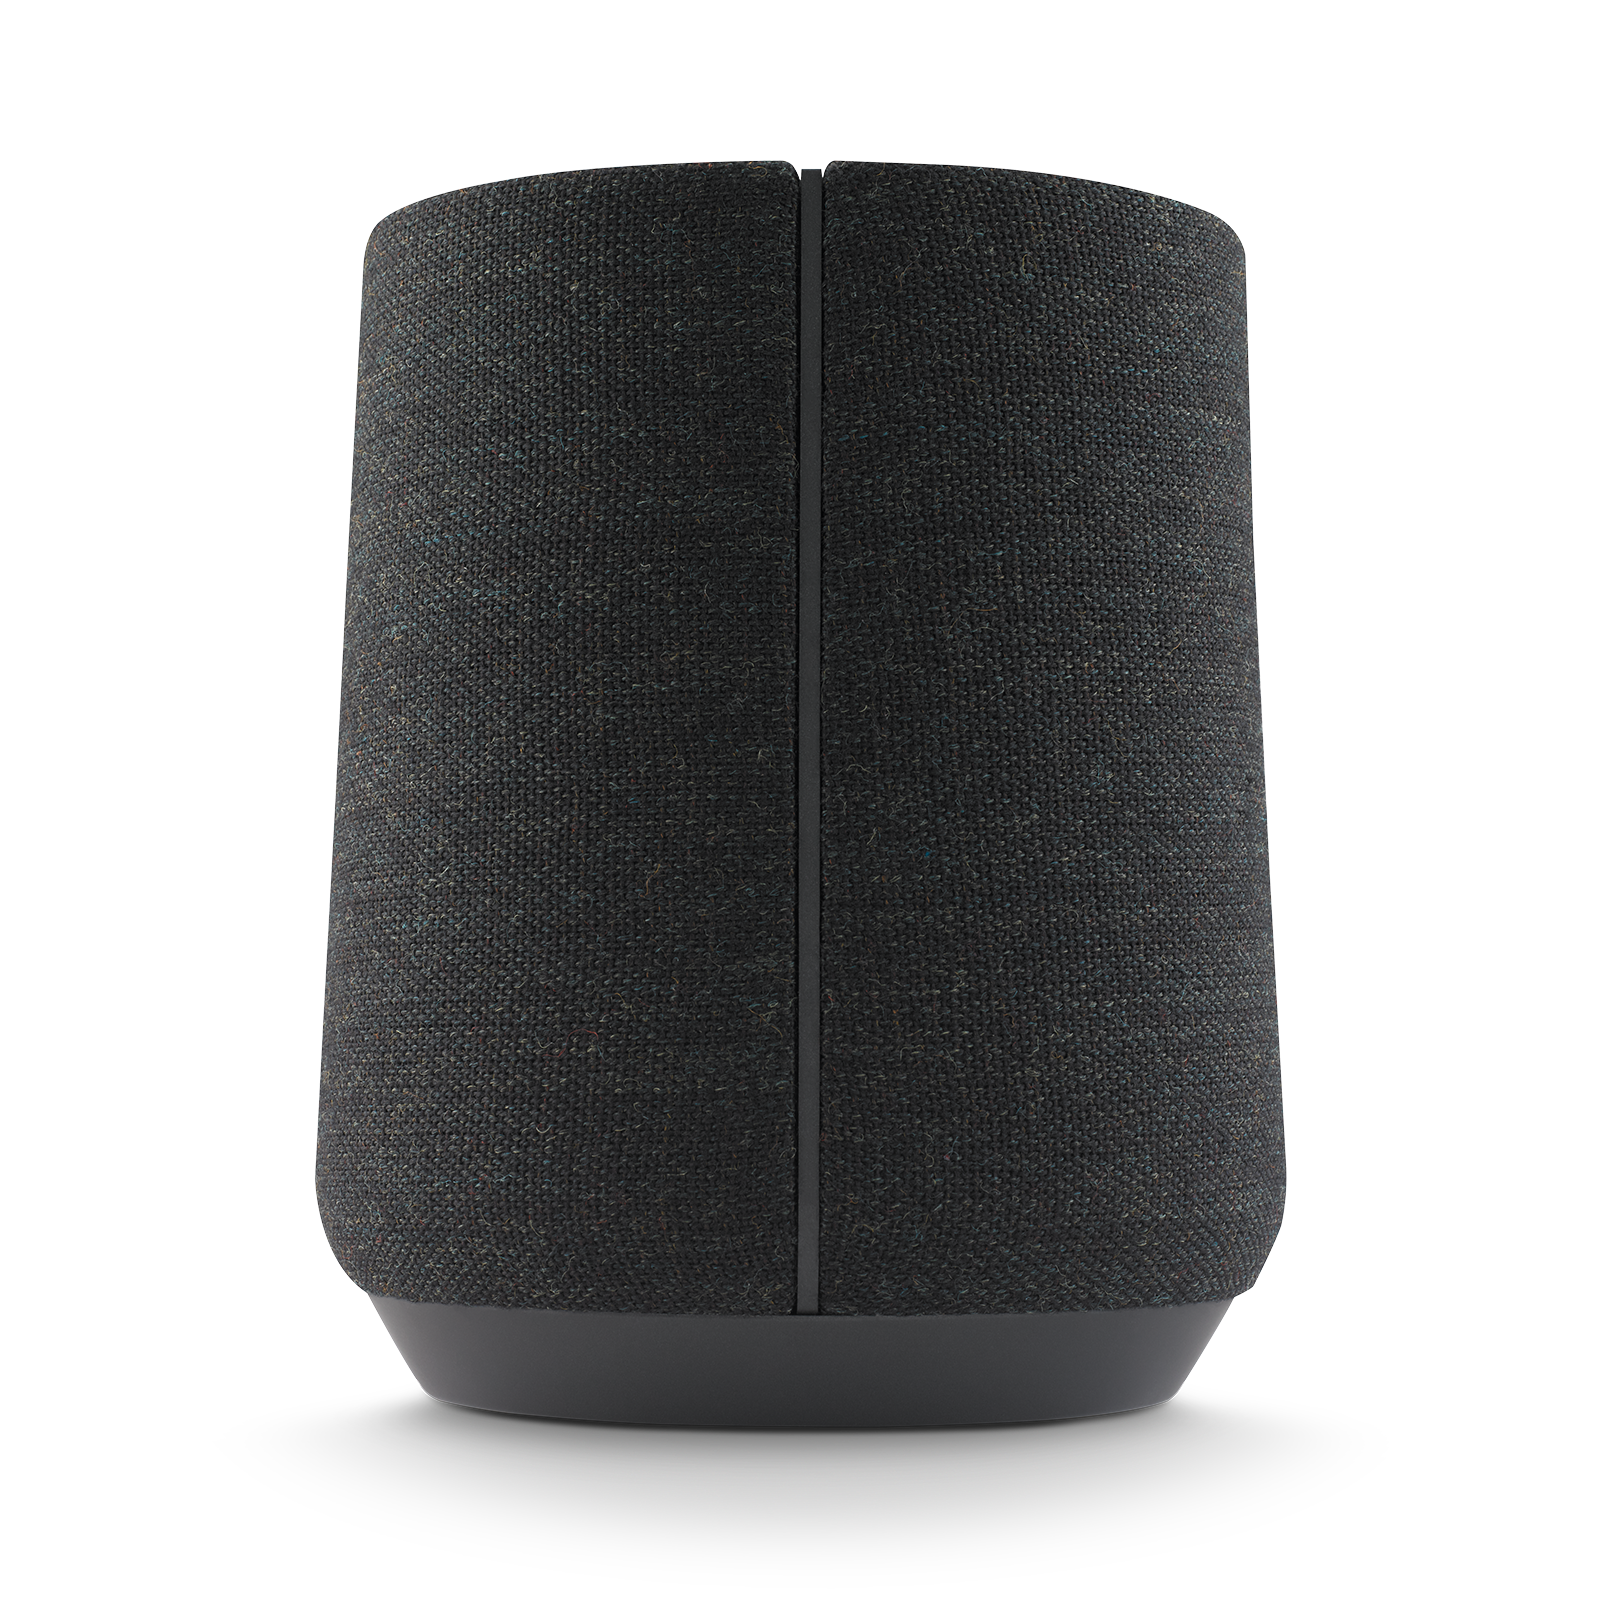 Harman Kardon Citation 300 - Black - The medium-size smart home speaker with award winning design - Detailshot 3